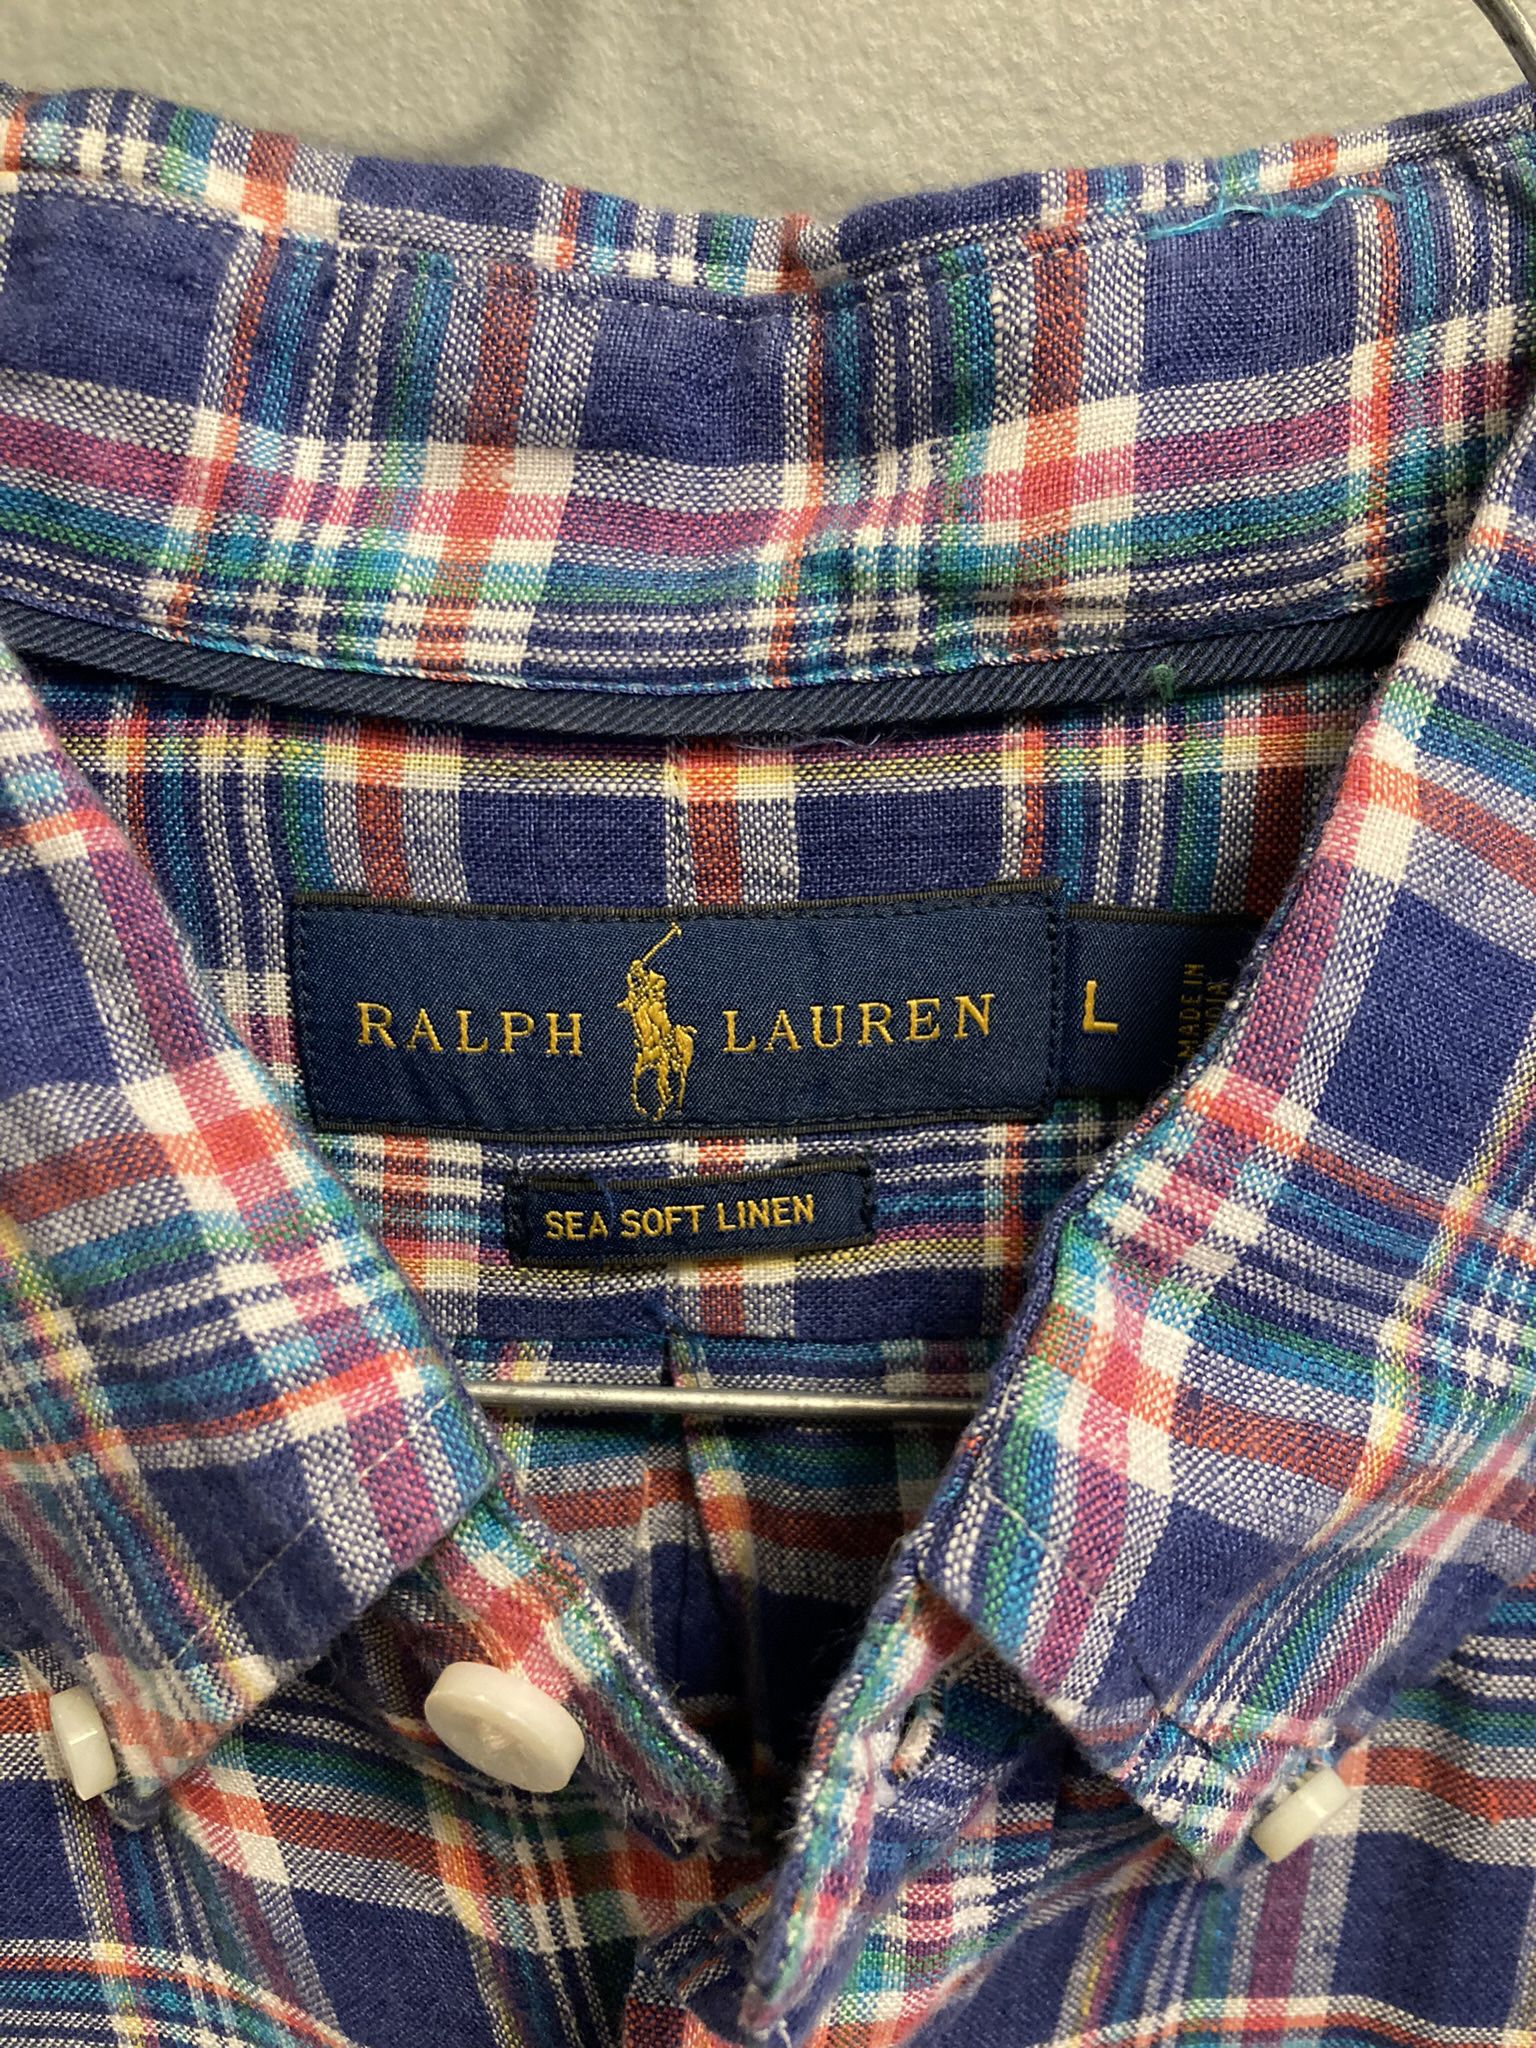 Men’s Ralph, Lauren Linen Shirt, Large, Like New 